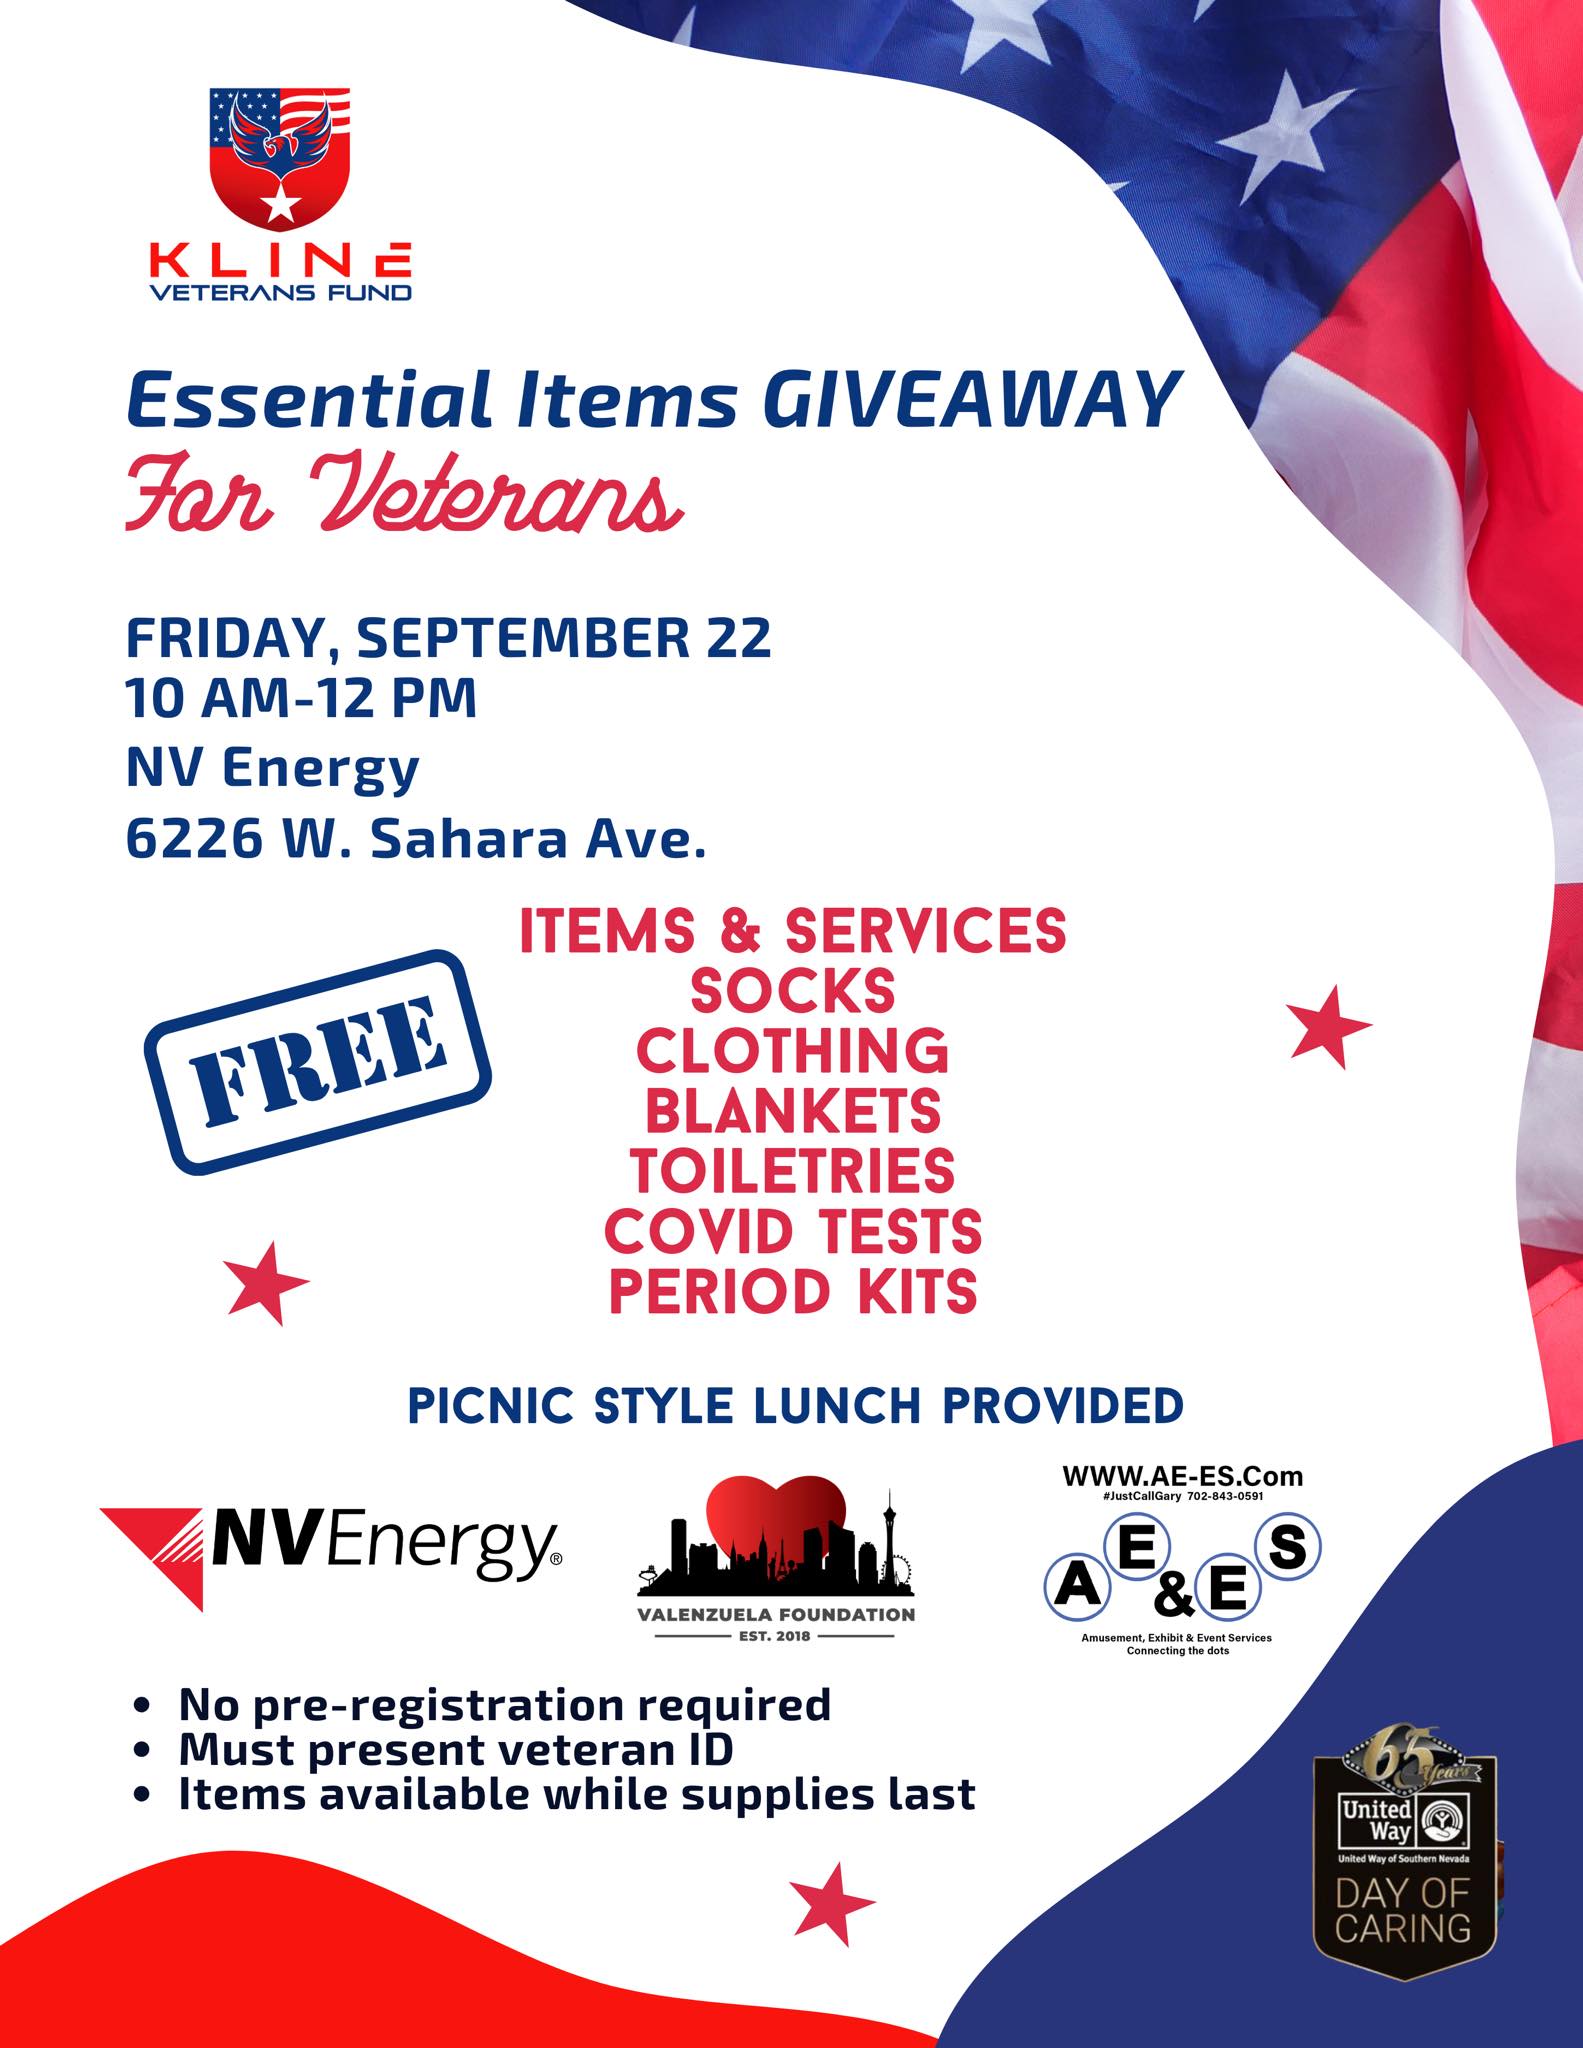 Kline Veterans Fund Essential Items Giveaway for Veterans flyer